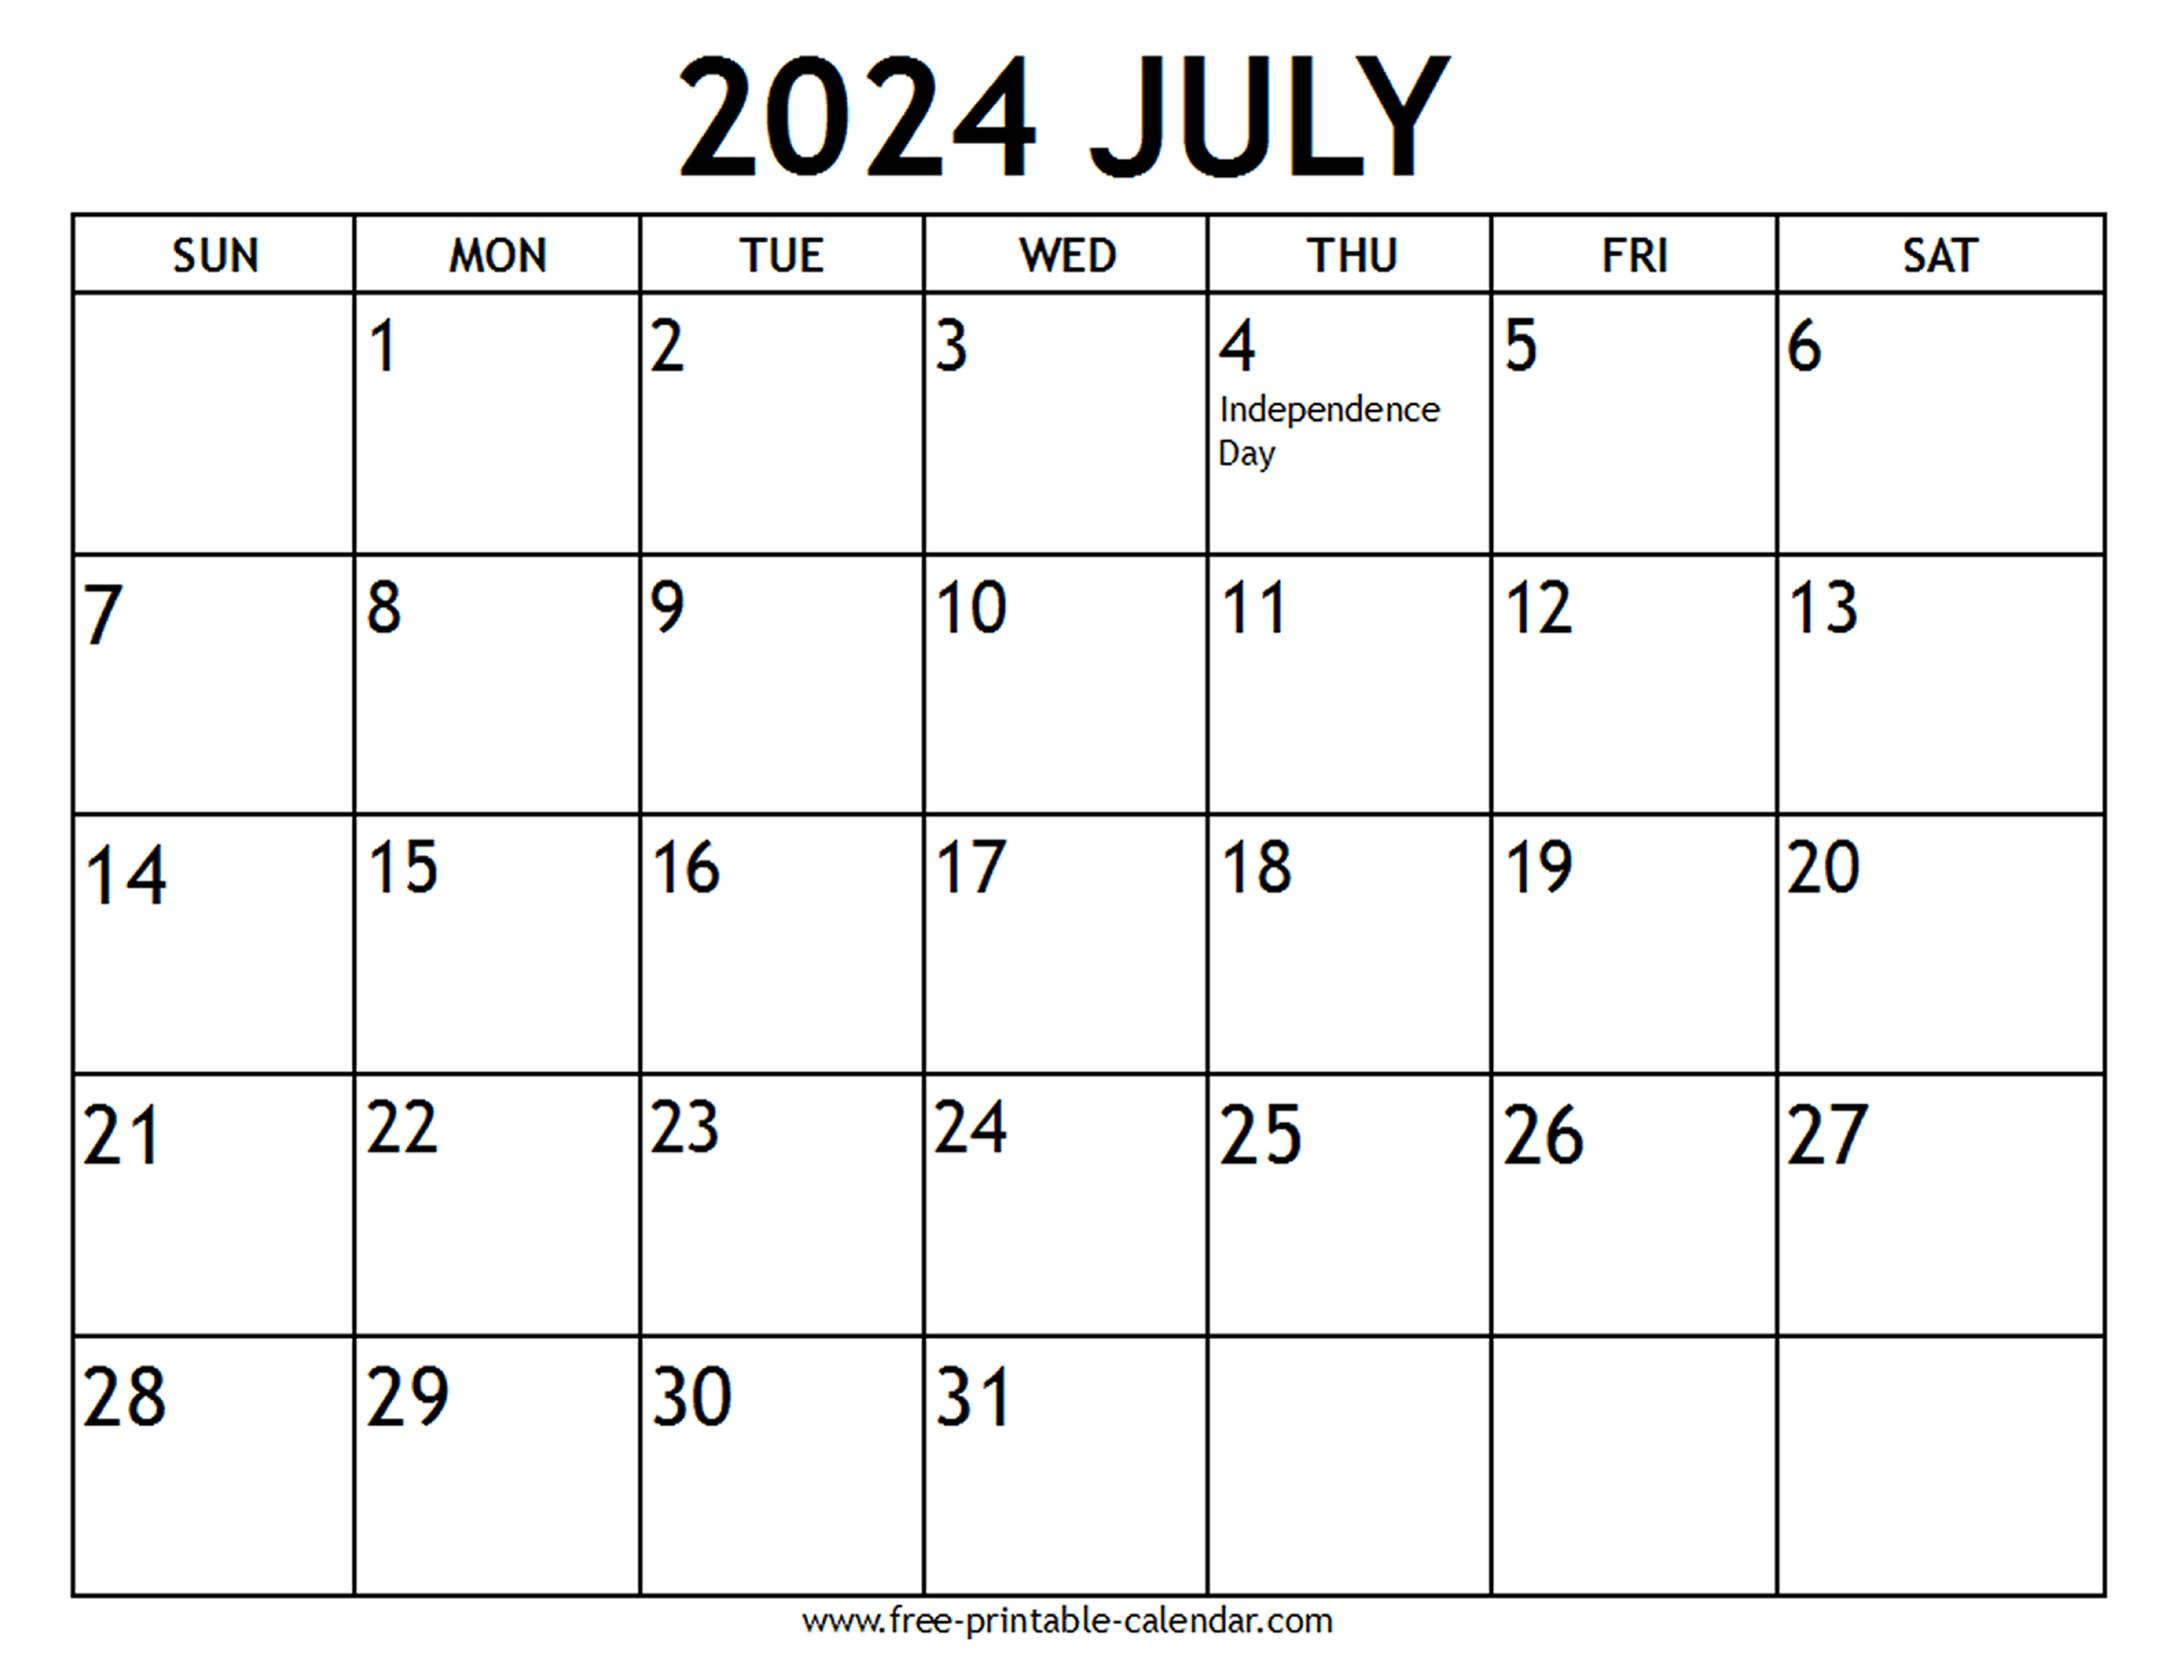 July 2024 Calendar Us Holidays - Free-Printable-Calendar with Calendar July 2024 With Holidays